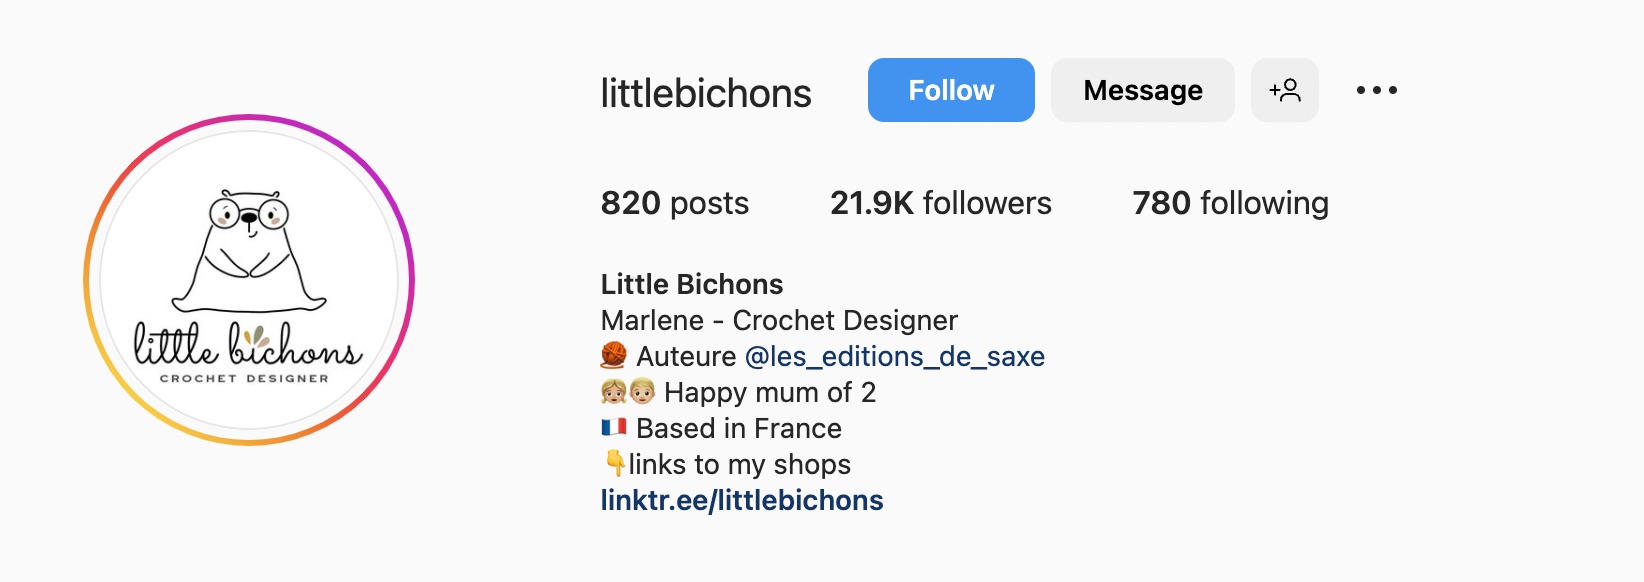 Creative Instagram bio ideas for Etsy shops, little bichons